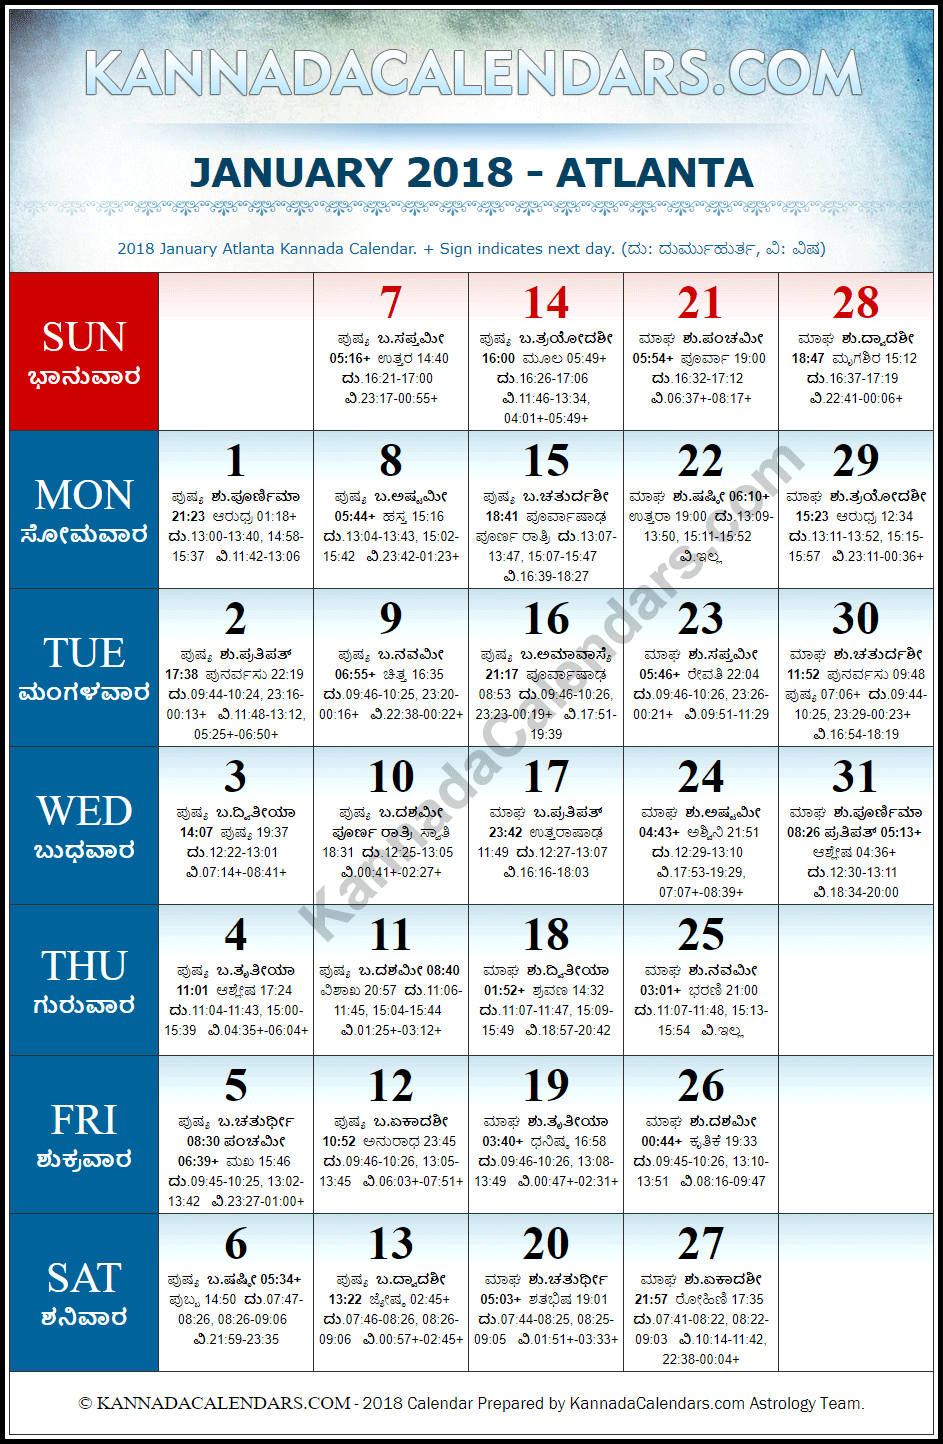 January 2018 Kannada Calendar for Atlanta, USA